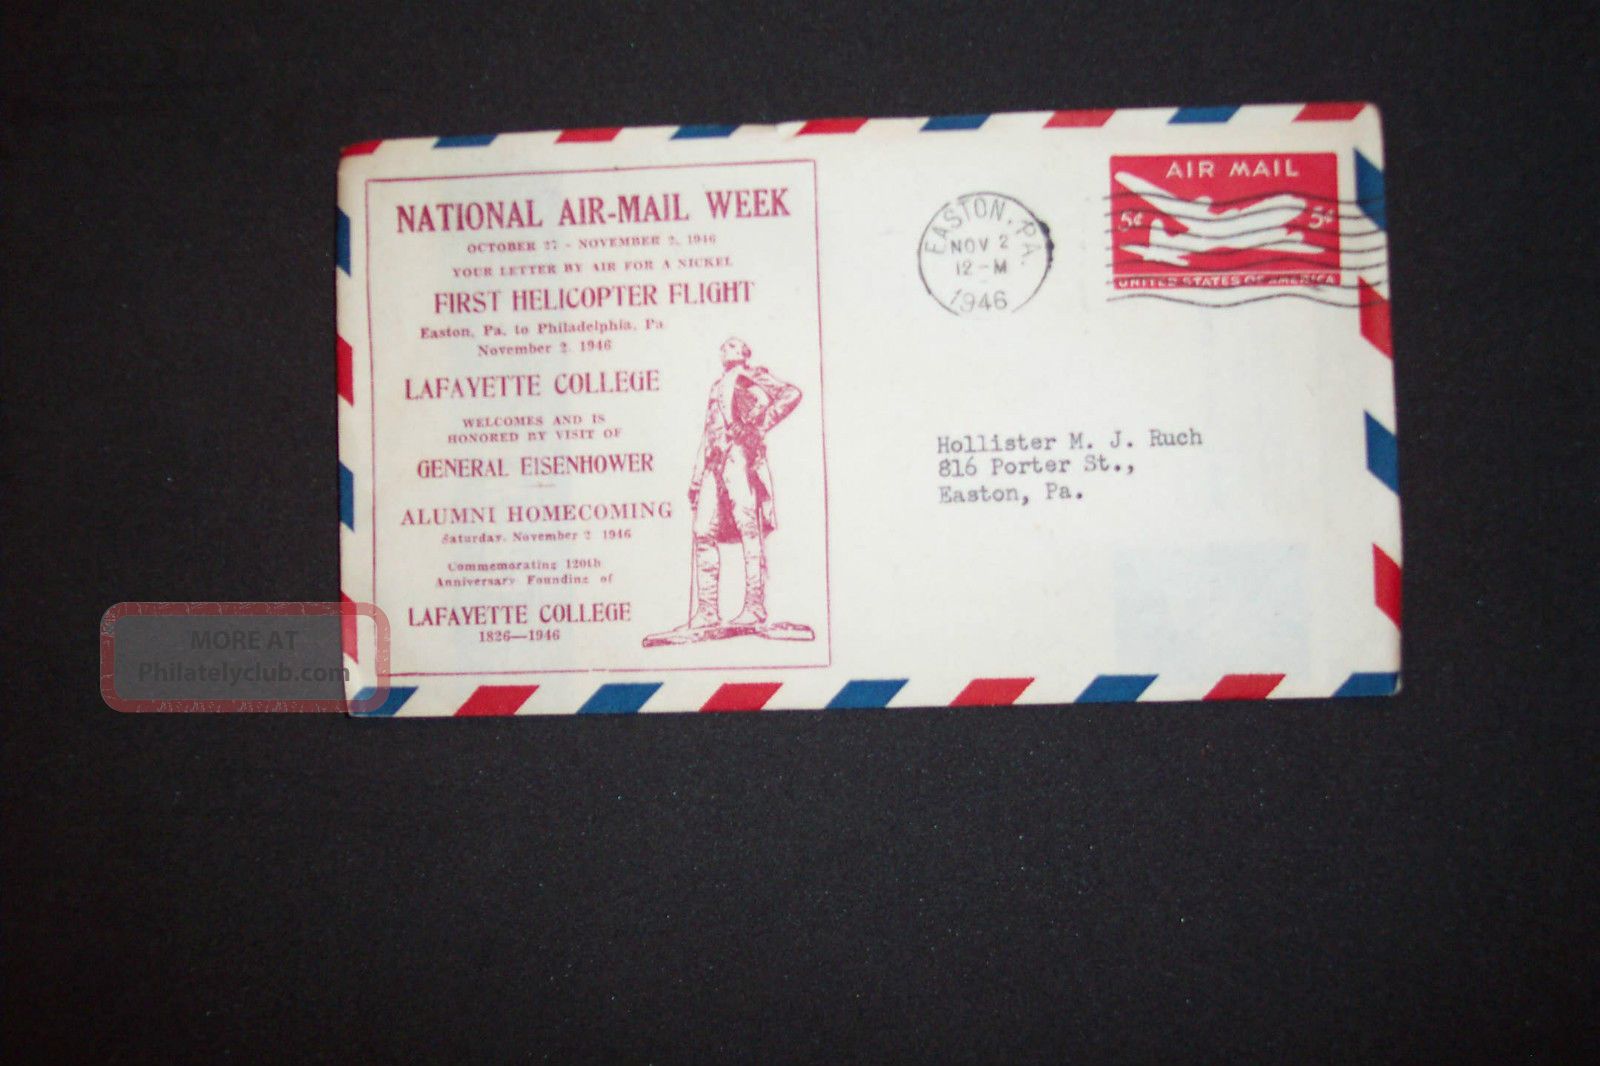 National Air - Mail Week Oct.  27 - Nov.  2,  1946 Scott Uc14 FDCs (pre-1951) photo